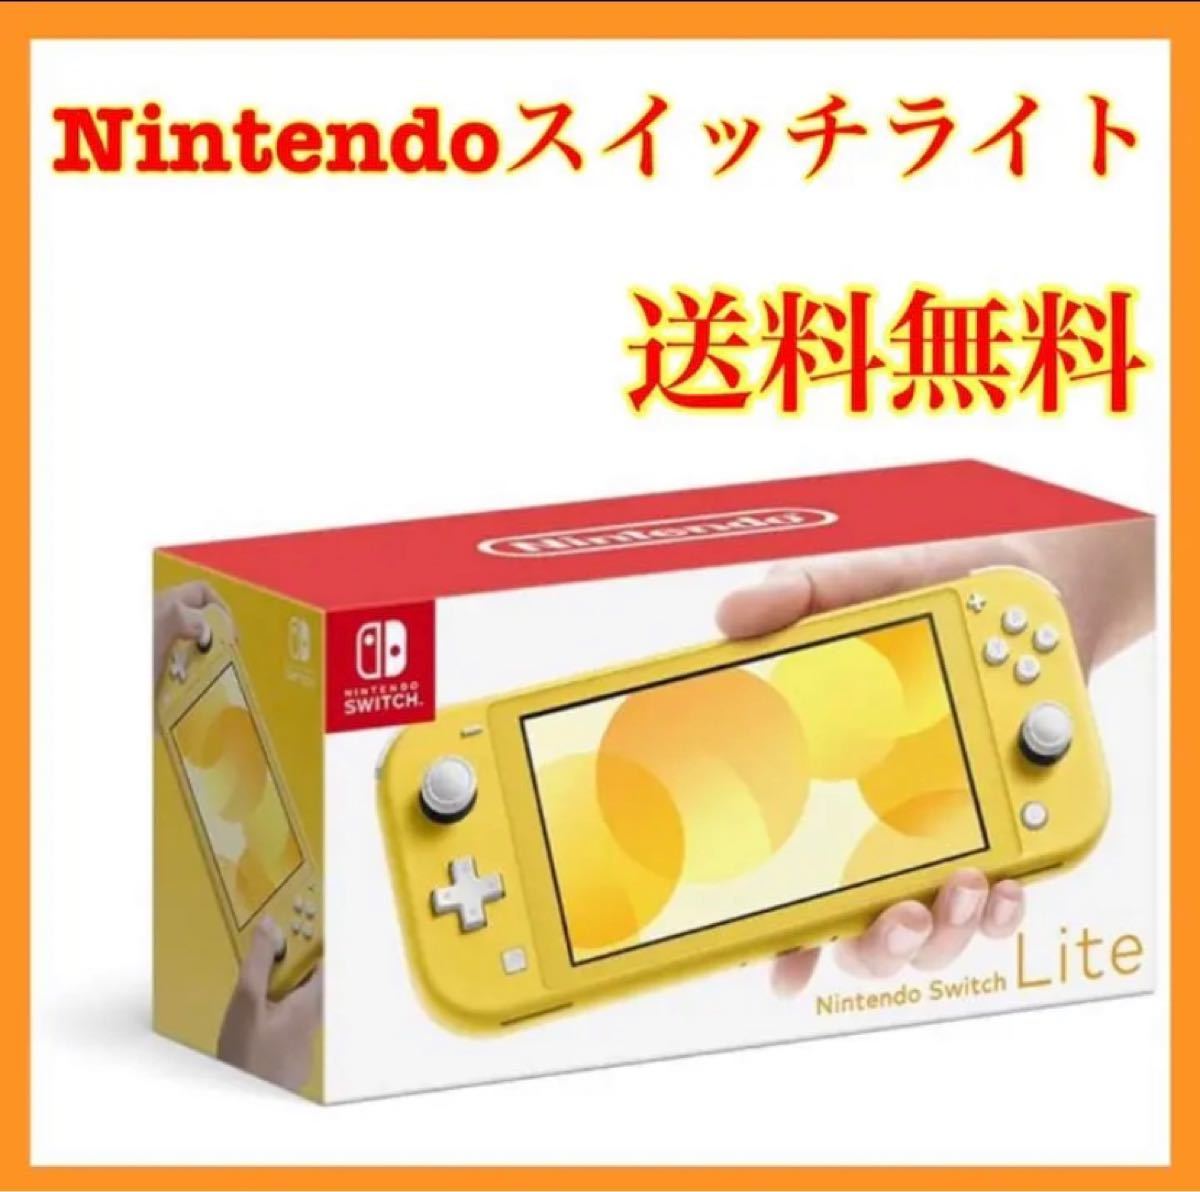 Nintendo Switch NINTENDO SWITCH LITE イエローcolor: YELLOW